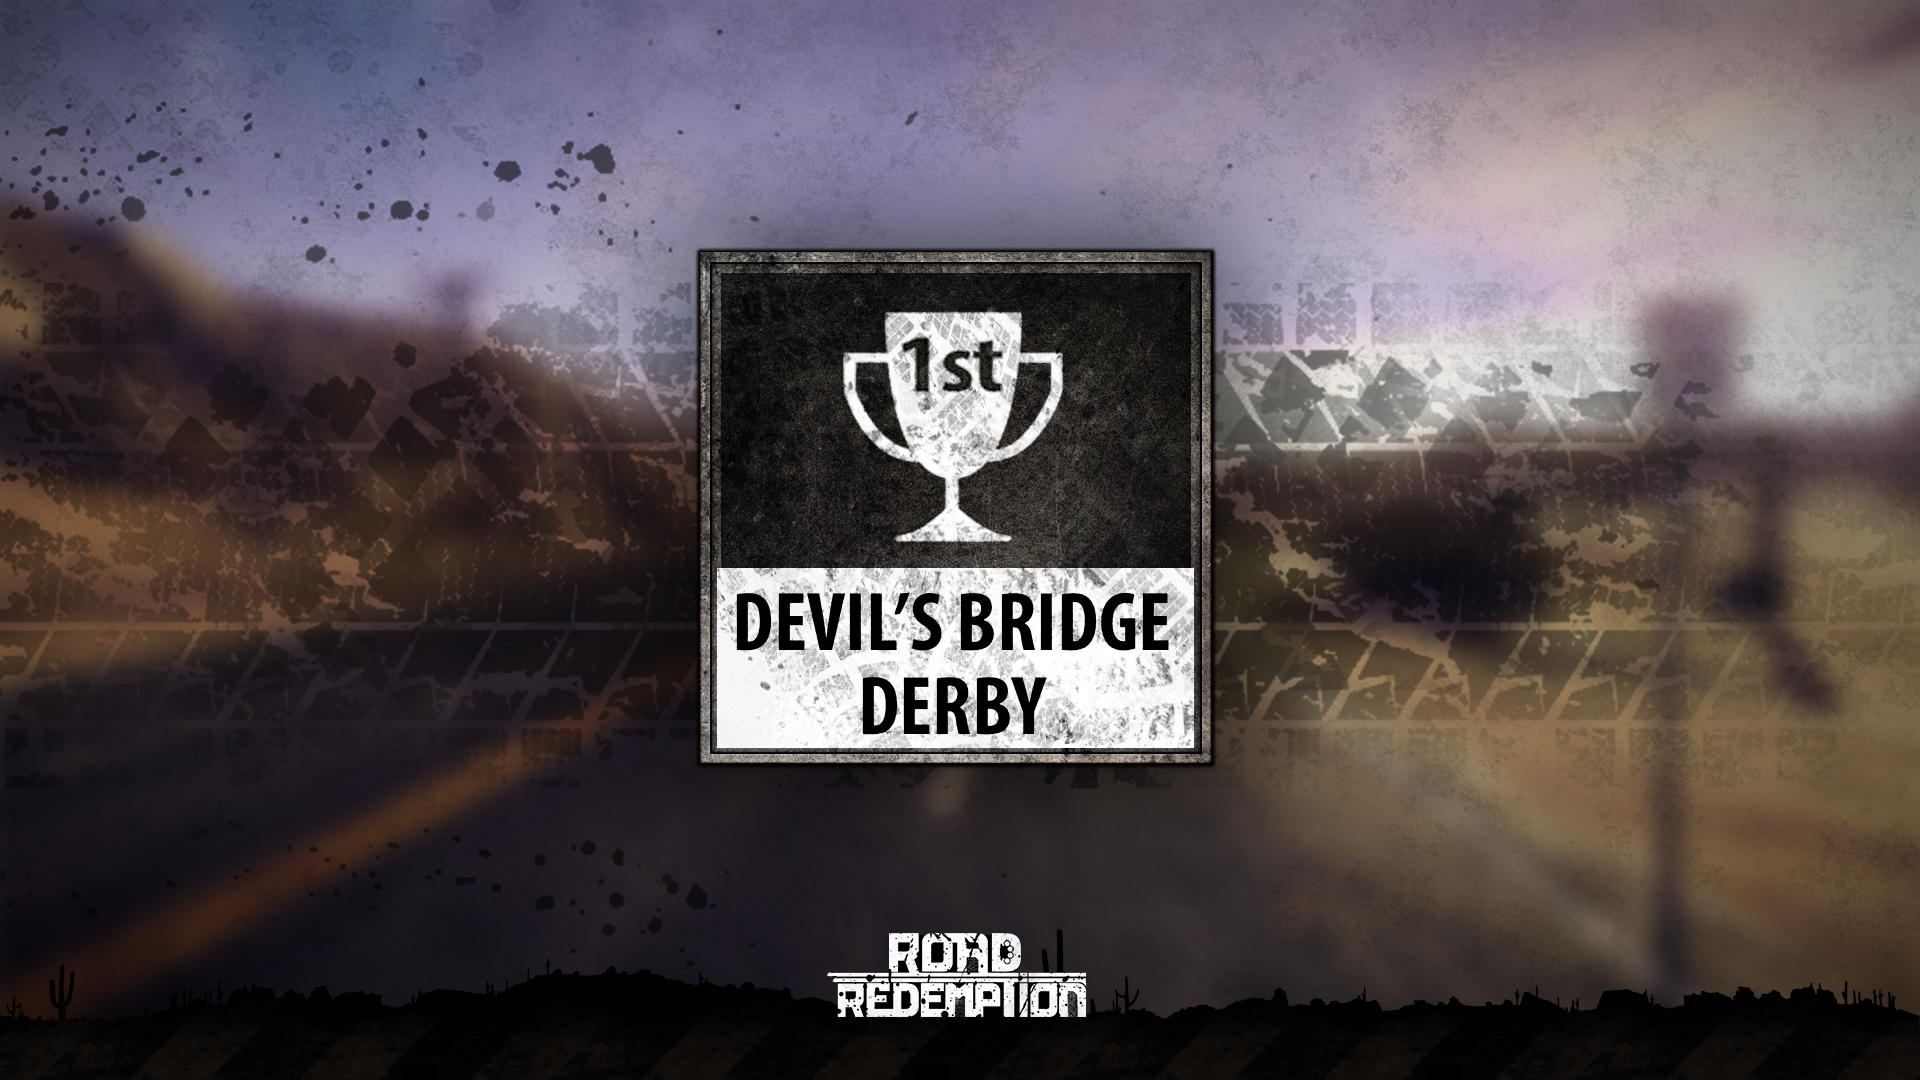 Devil's Bridge Derby Gold!